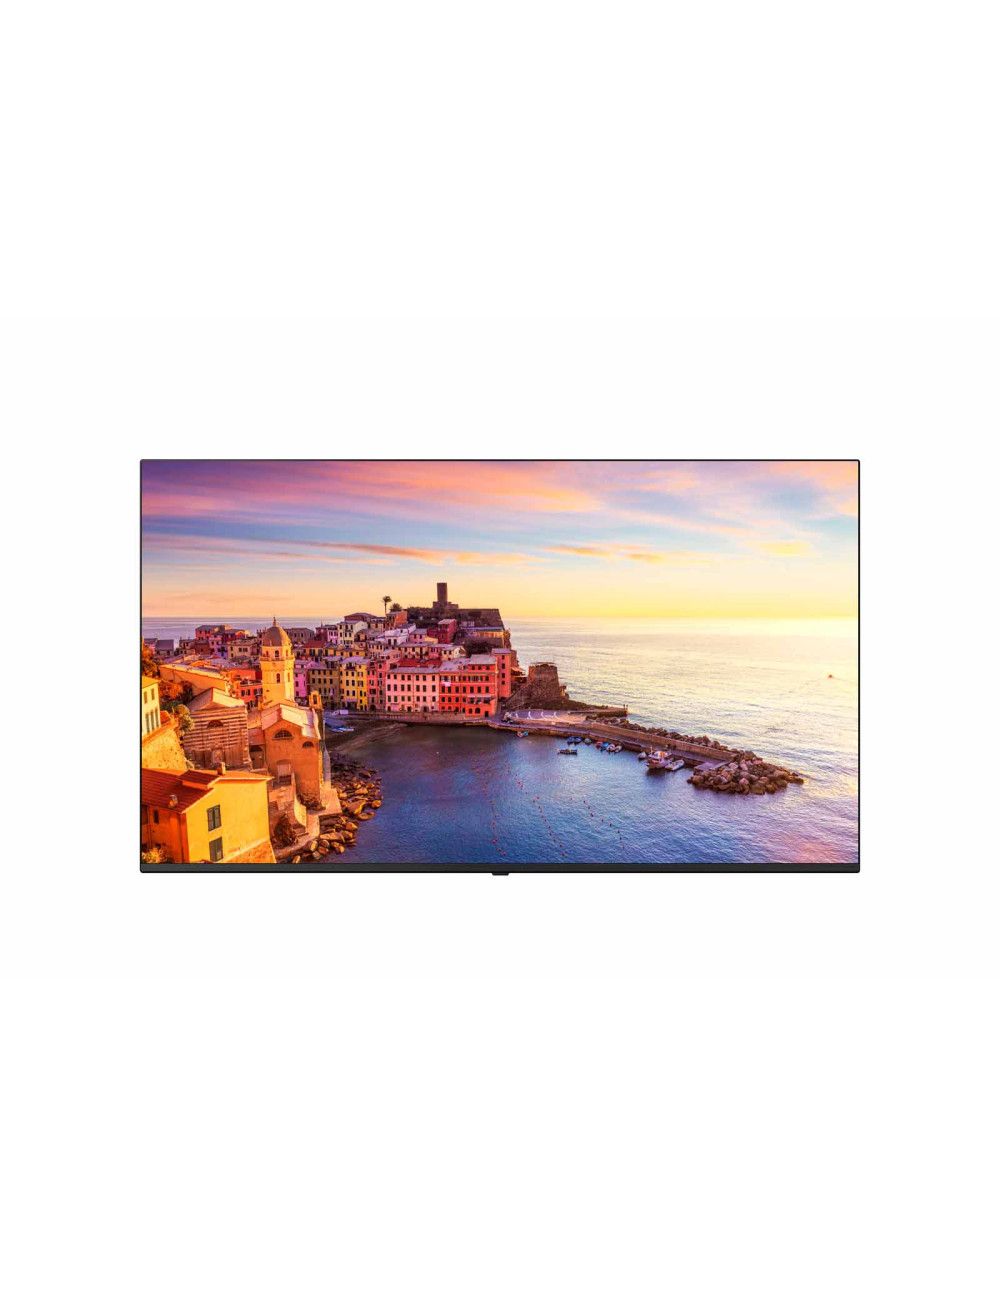 LG 50UM662H0LC 50'' (127 cm) Smart TV webOS 23 4K UHD Black